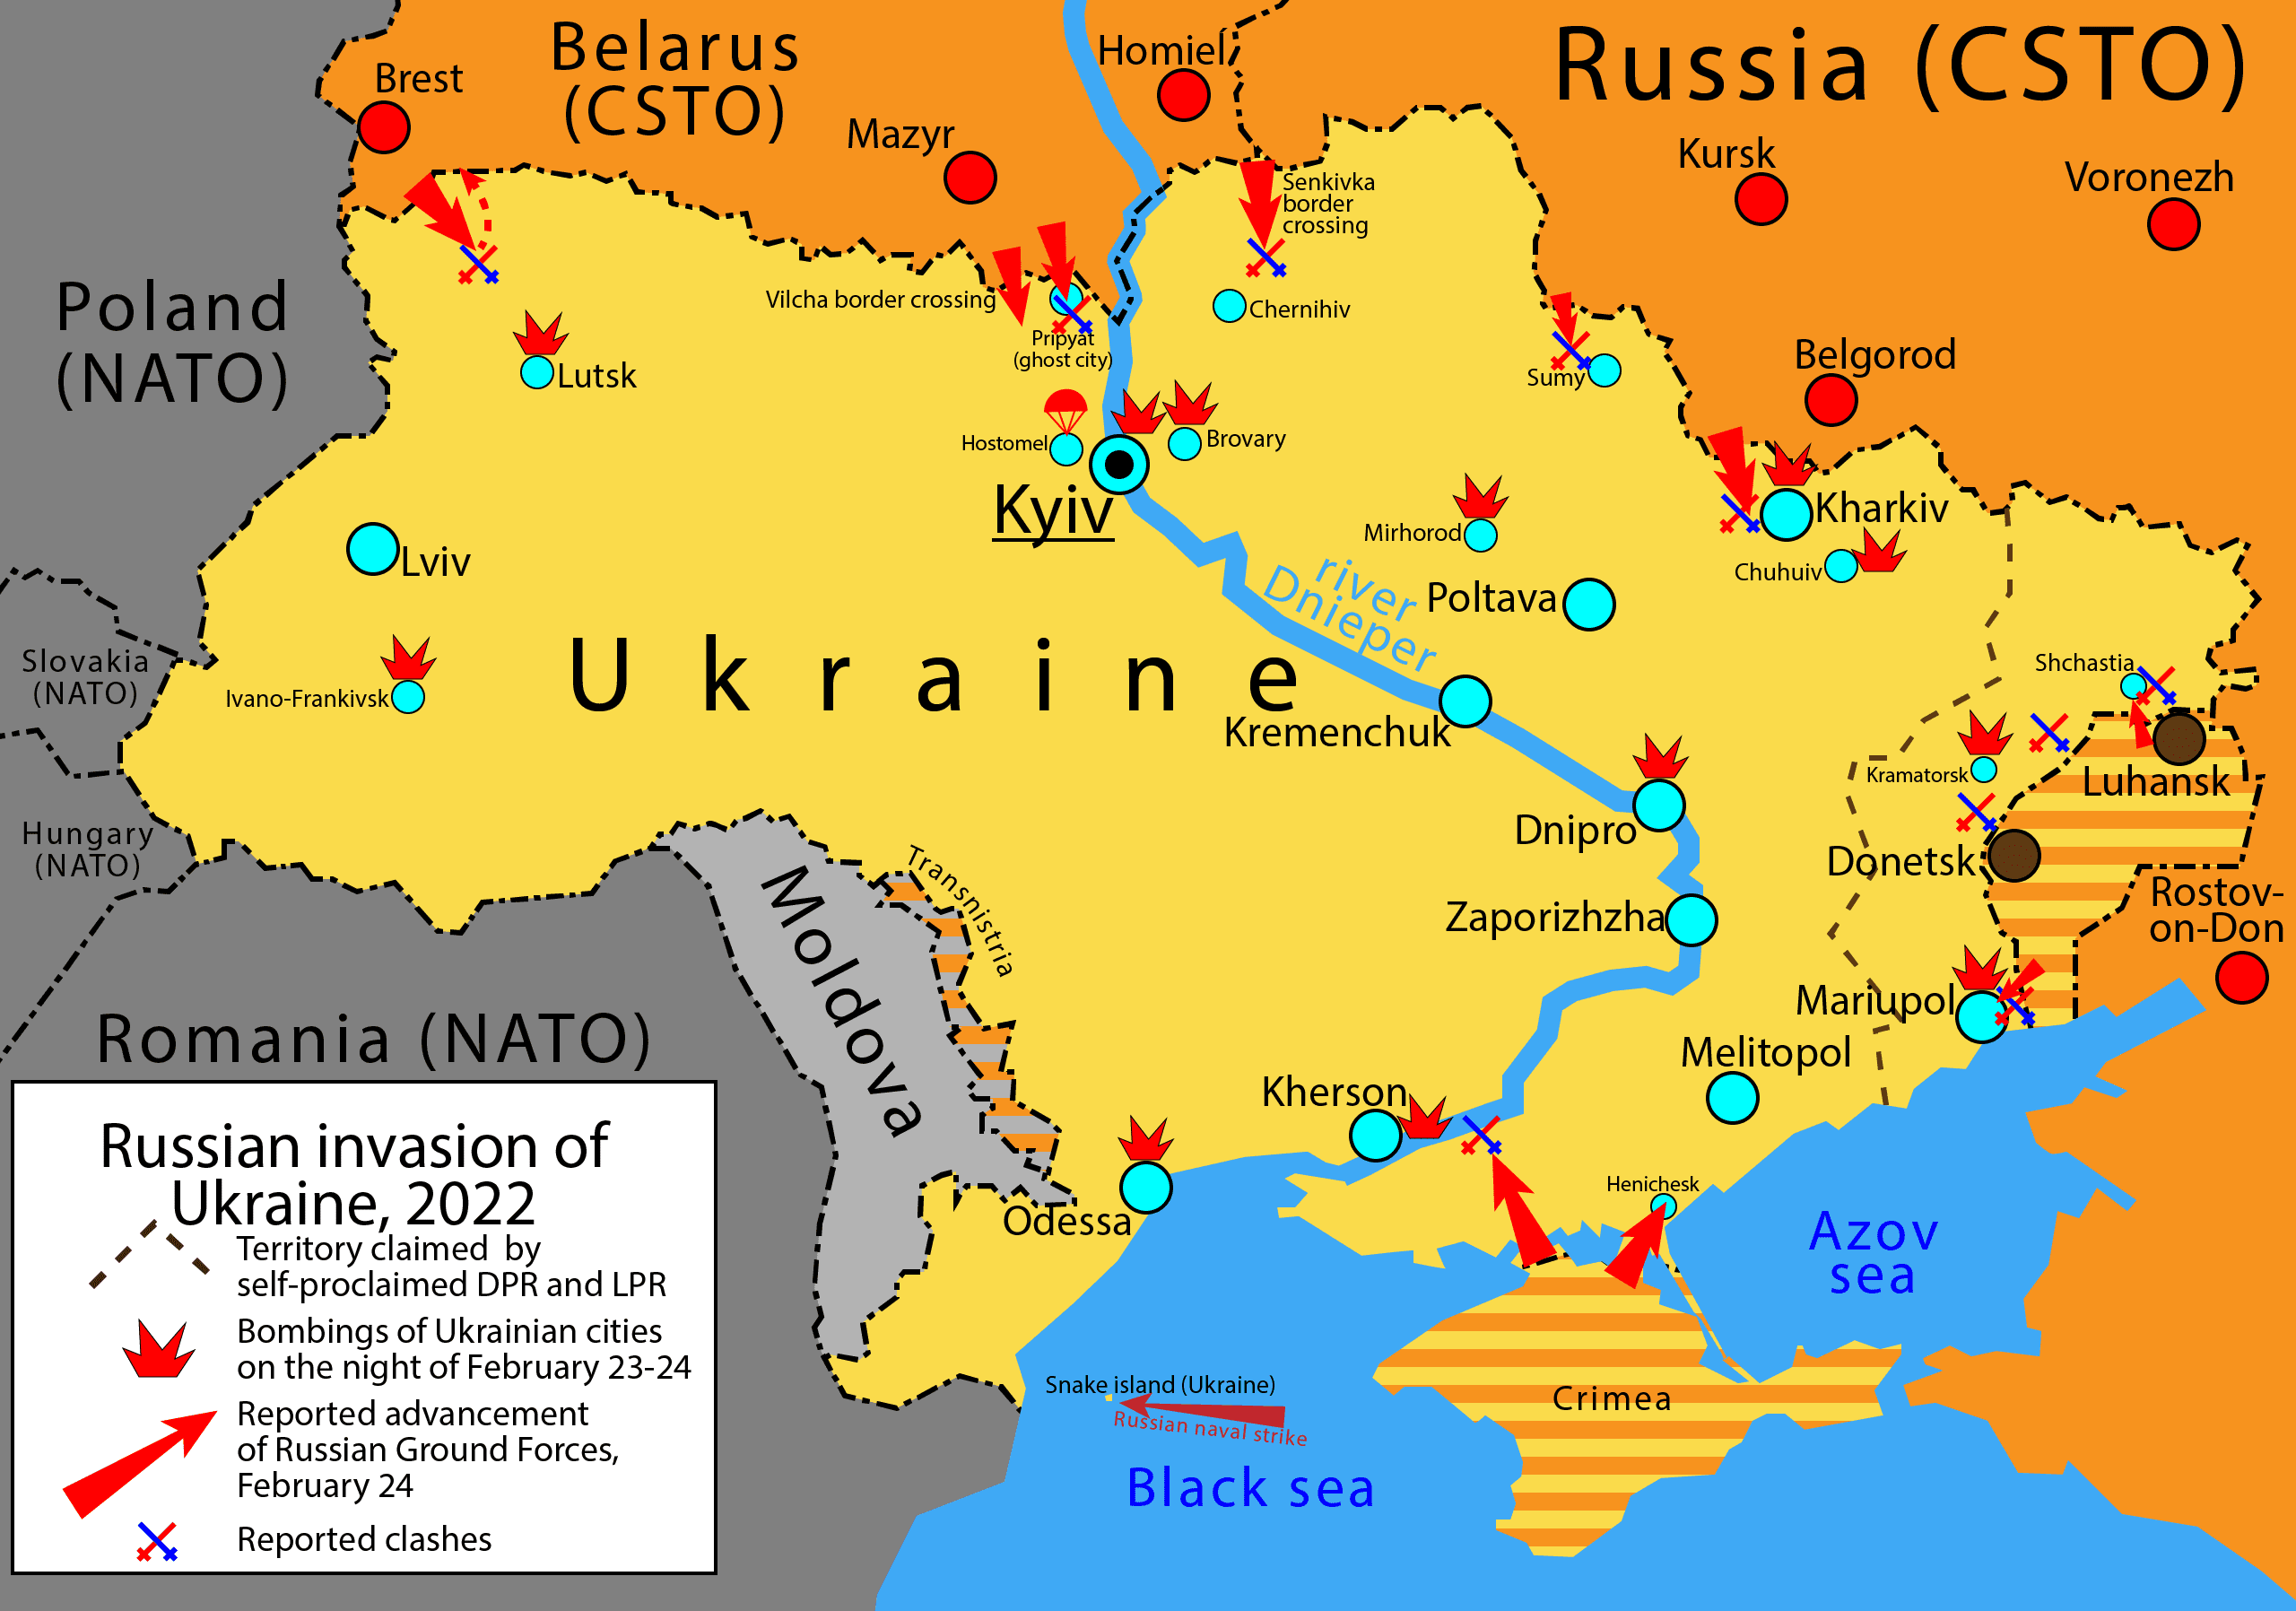 2022 Russian invasion of Ukraine – invasion of Ukraine by Russia starting on 24 February 2022